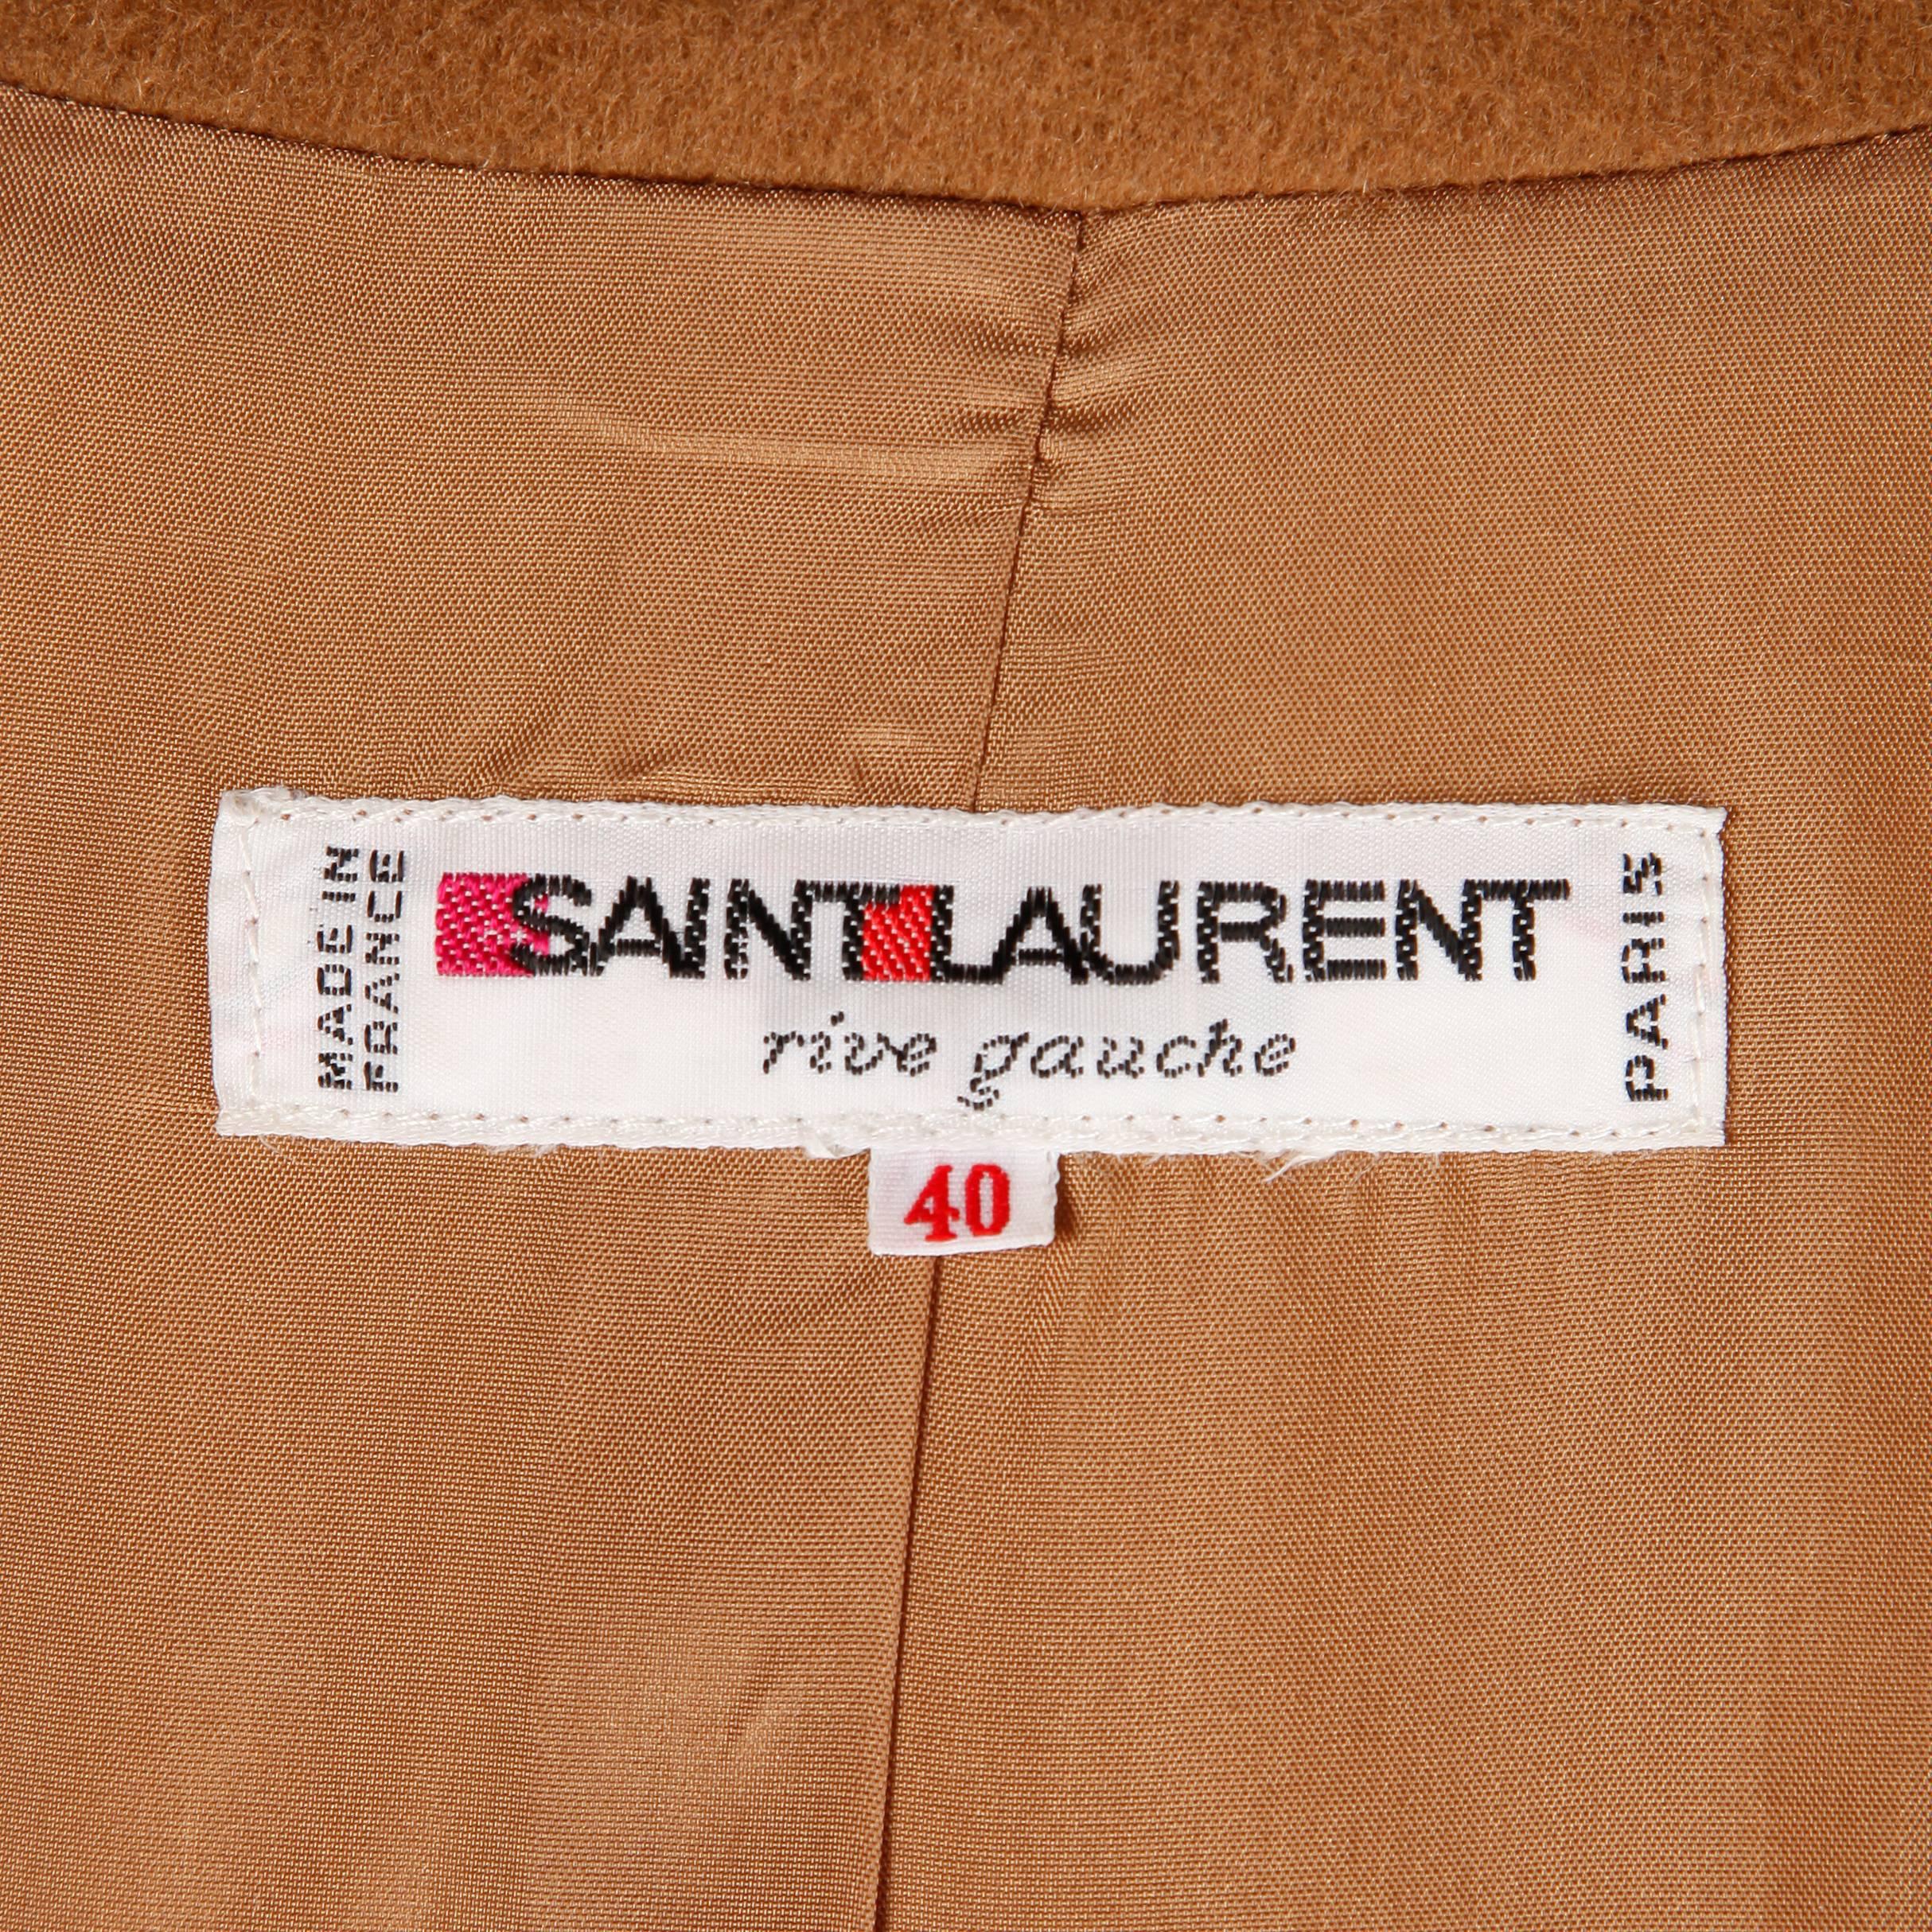 Vintage camel wool blazer jacket by Saint Laurent/ Rive Gauche.

Details: 

Fully Lined
Front Box Pockets
Button Front
Marked Size: 40
Estimated Size: M-L
Color: Camel
Fabric: Wool
Label: Saint Laurent/ Rive Gauche

Measurements: